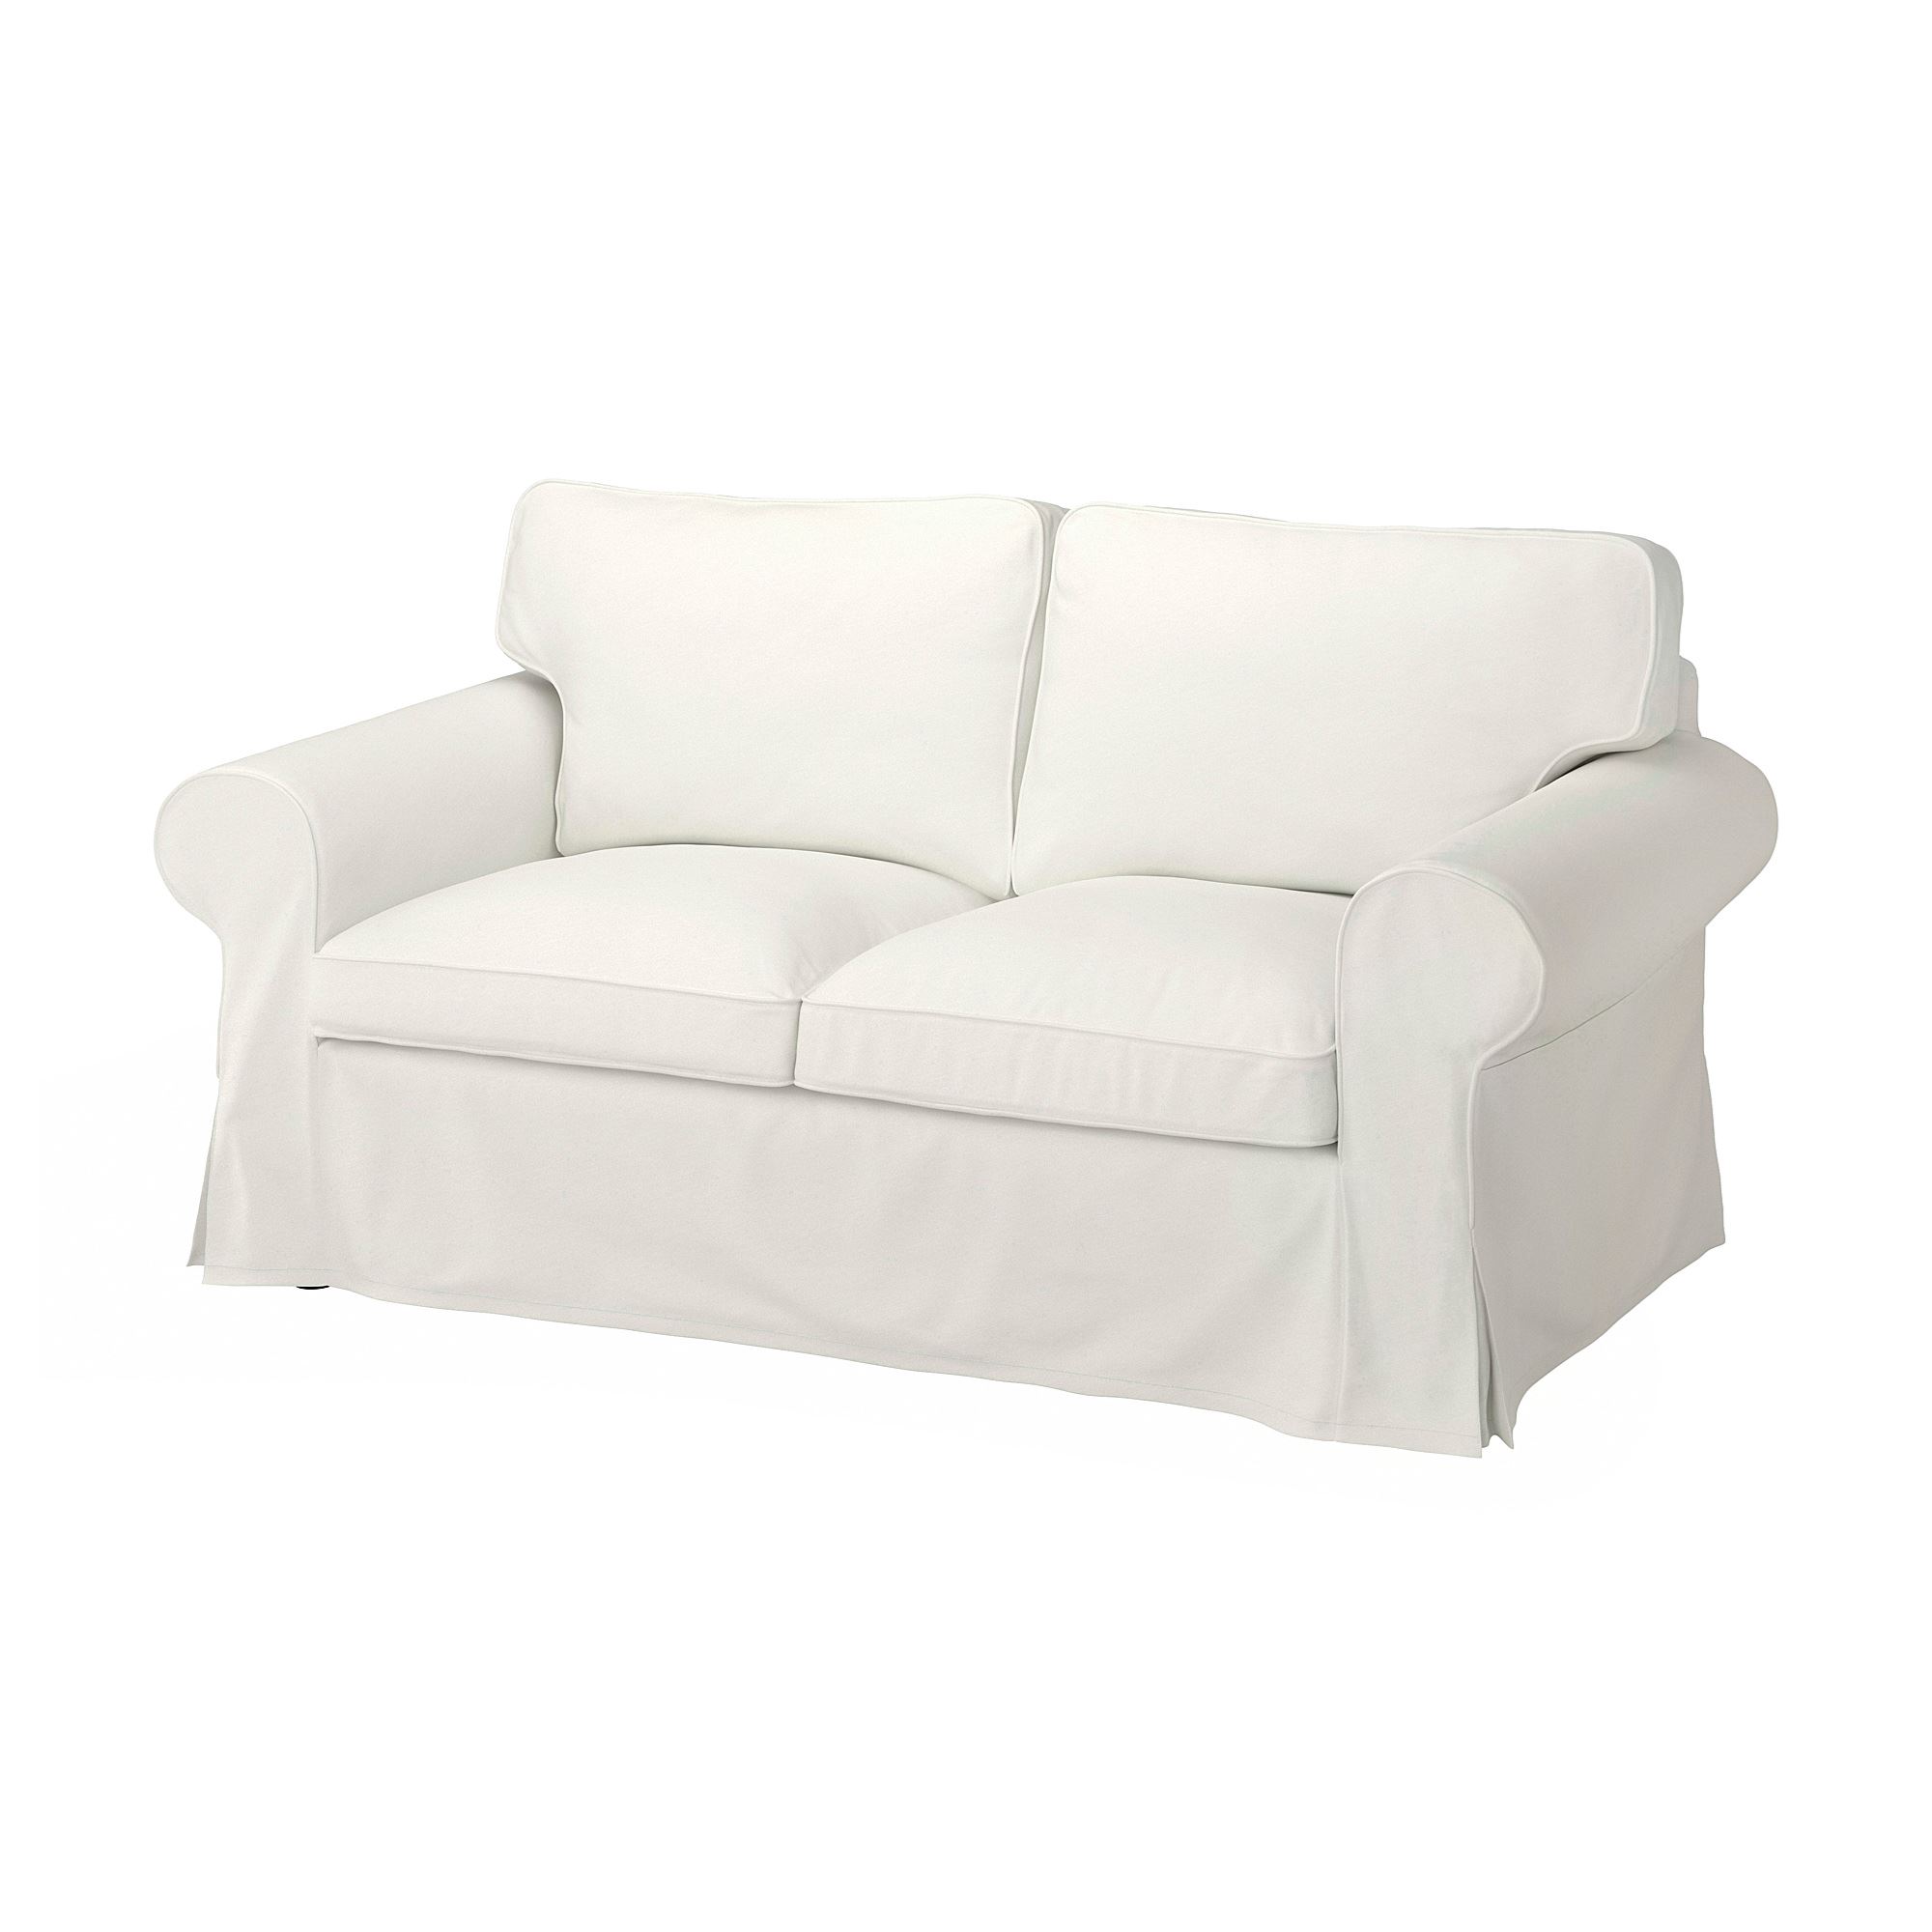 EKTORP blekinge white 2-seat sofa | IKEA